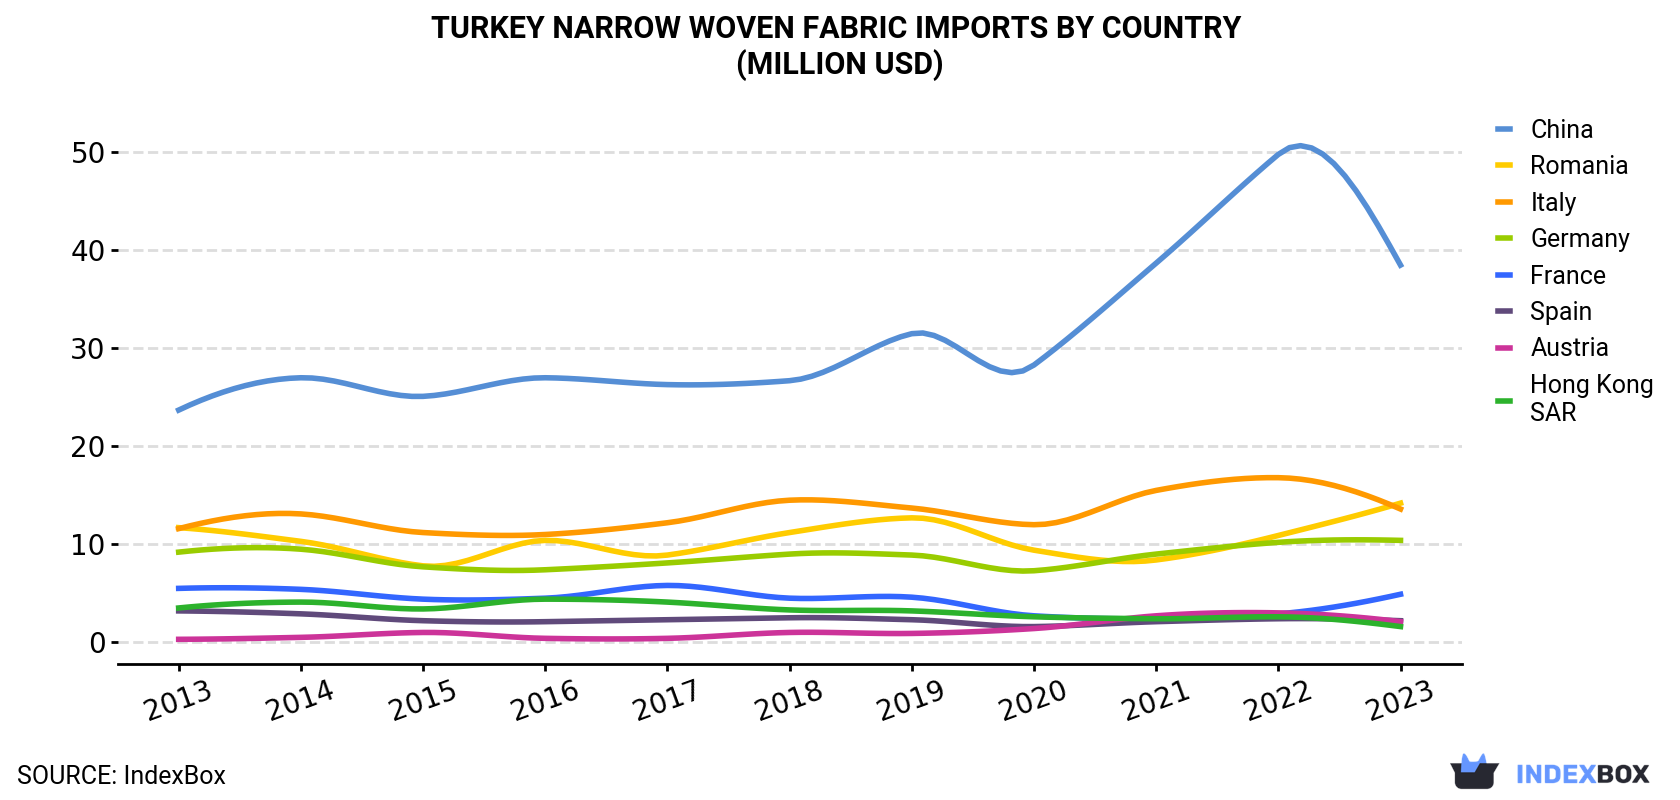 Turkey Narrow Woven Fabric Imports By Country (Million USD)